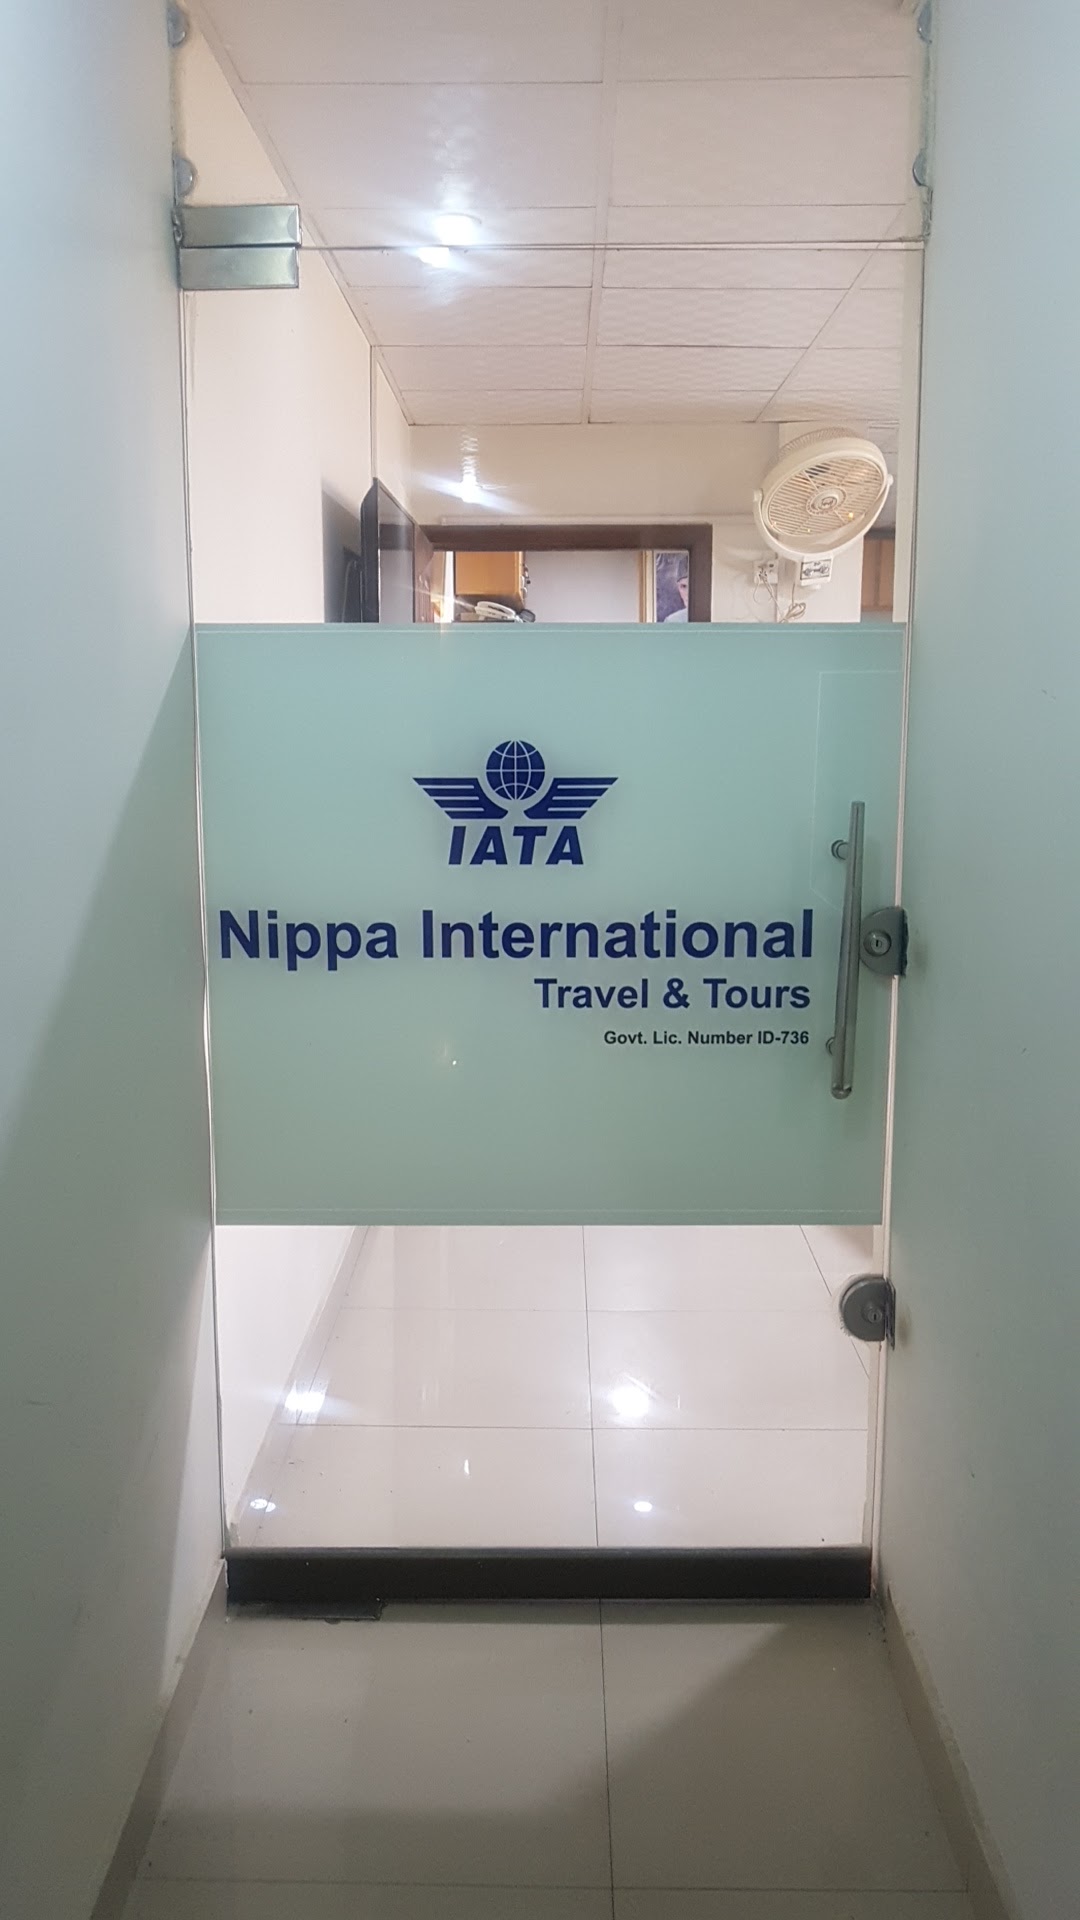 Nippa Travel & Tours